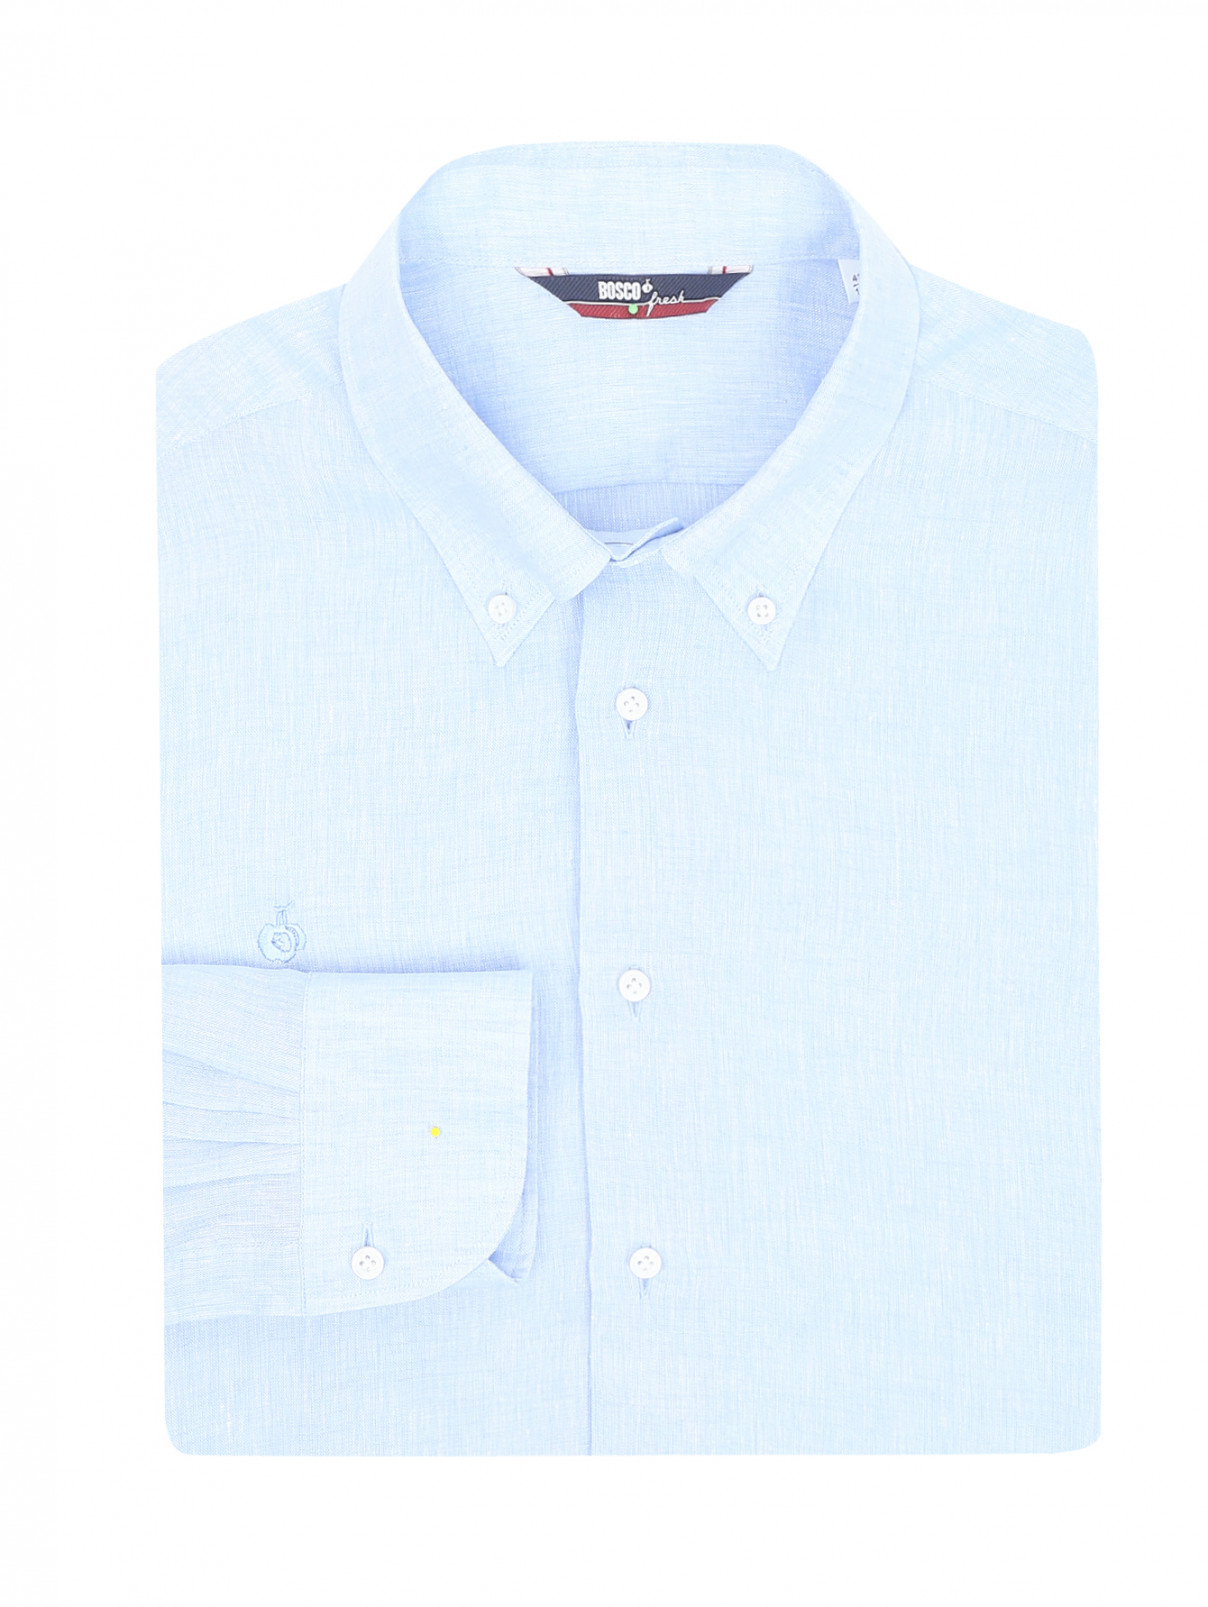 Рубашка из льна BOSCO  –  Общий вид  – Цвет:  Синий